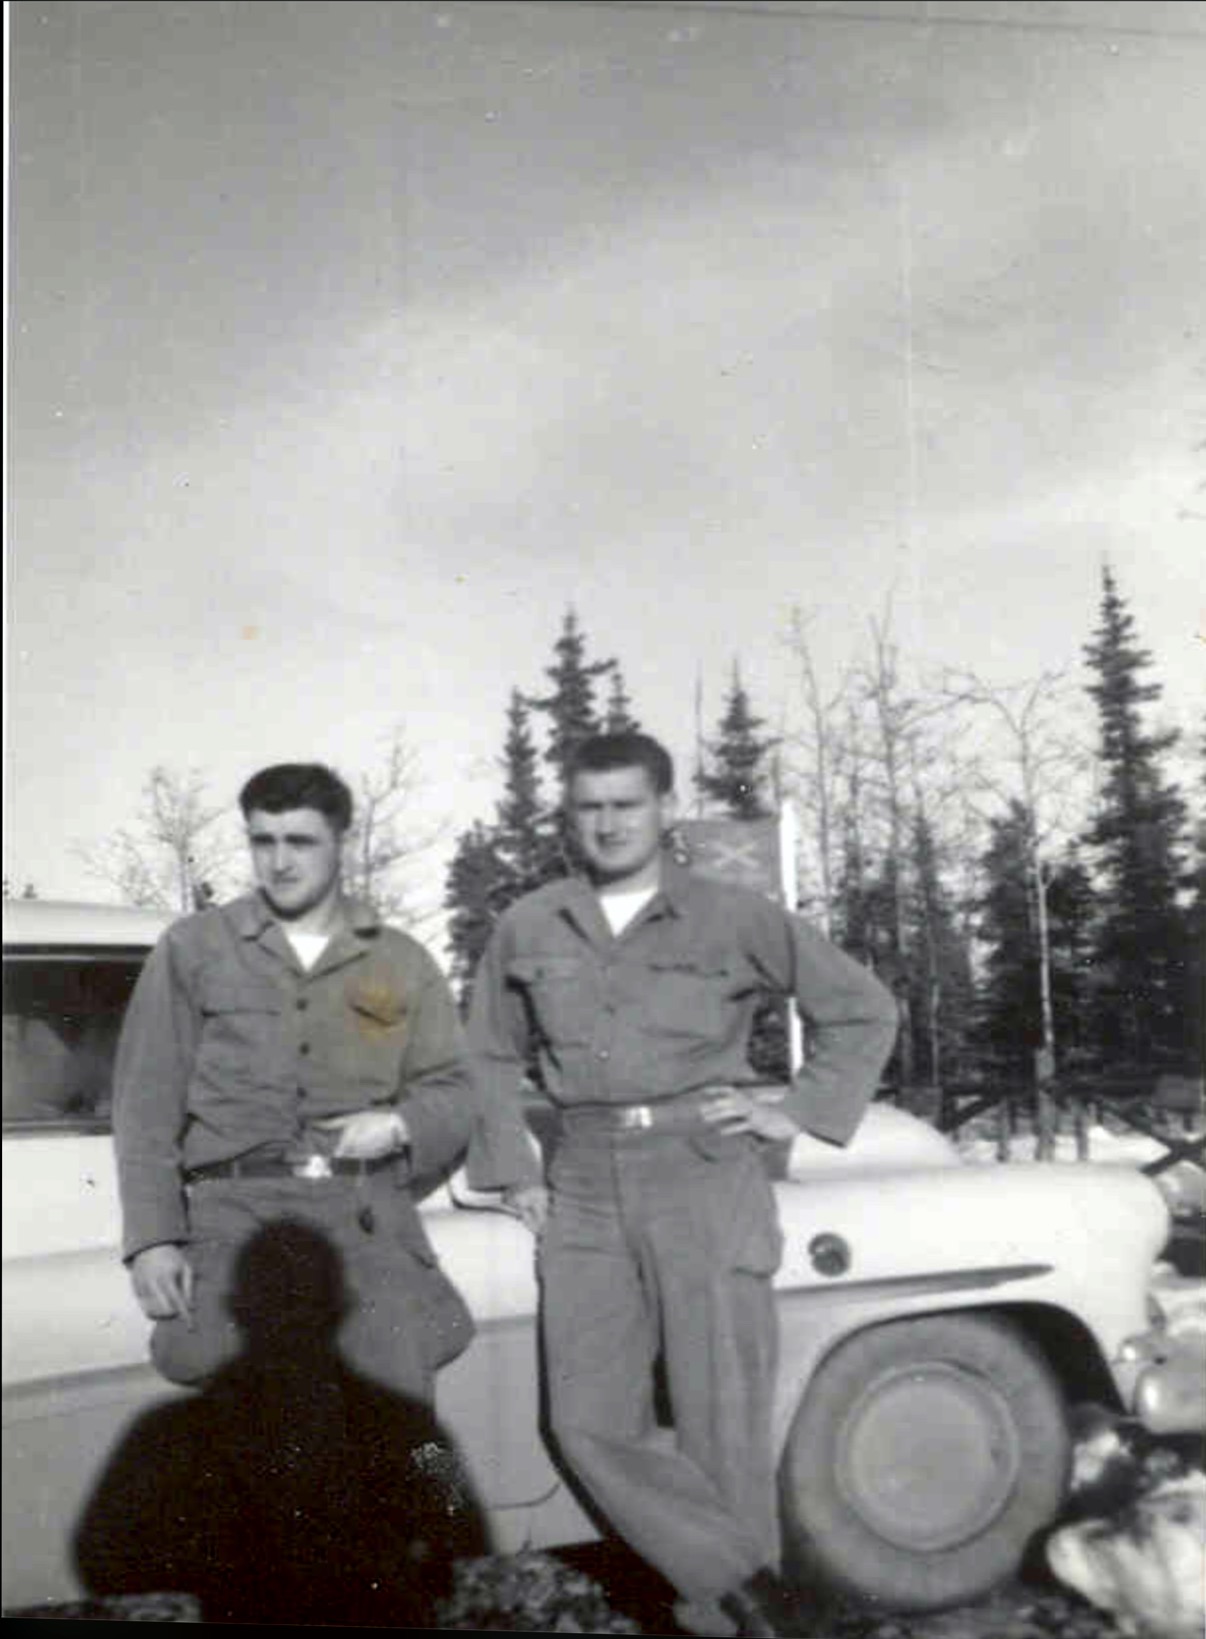 John Peach and me, Roger Rentel, Fort Richardson, Alaska, 1952.